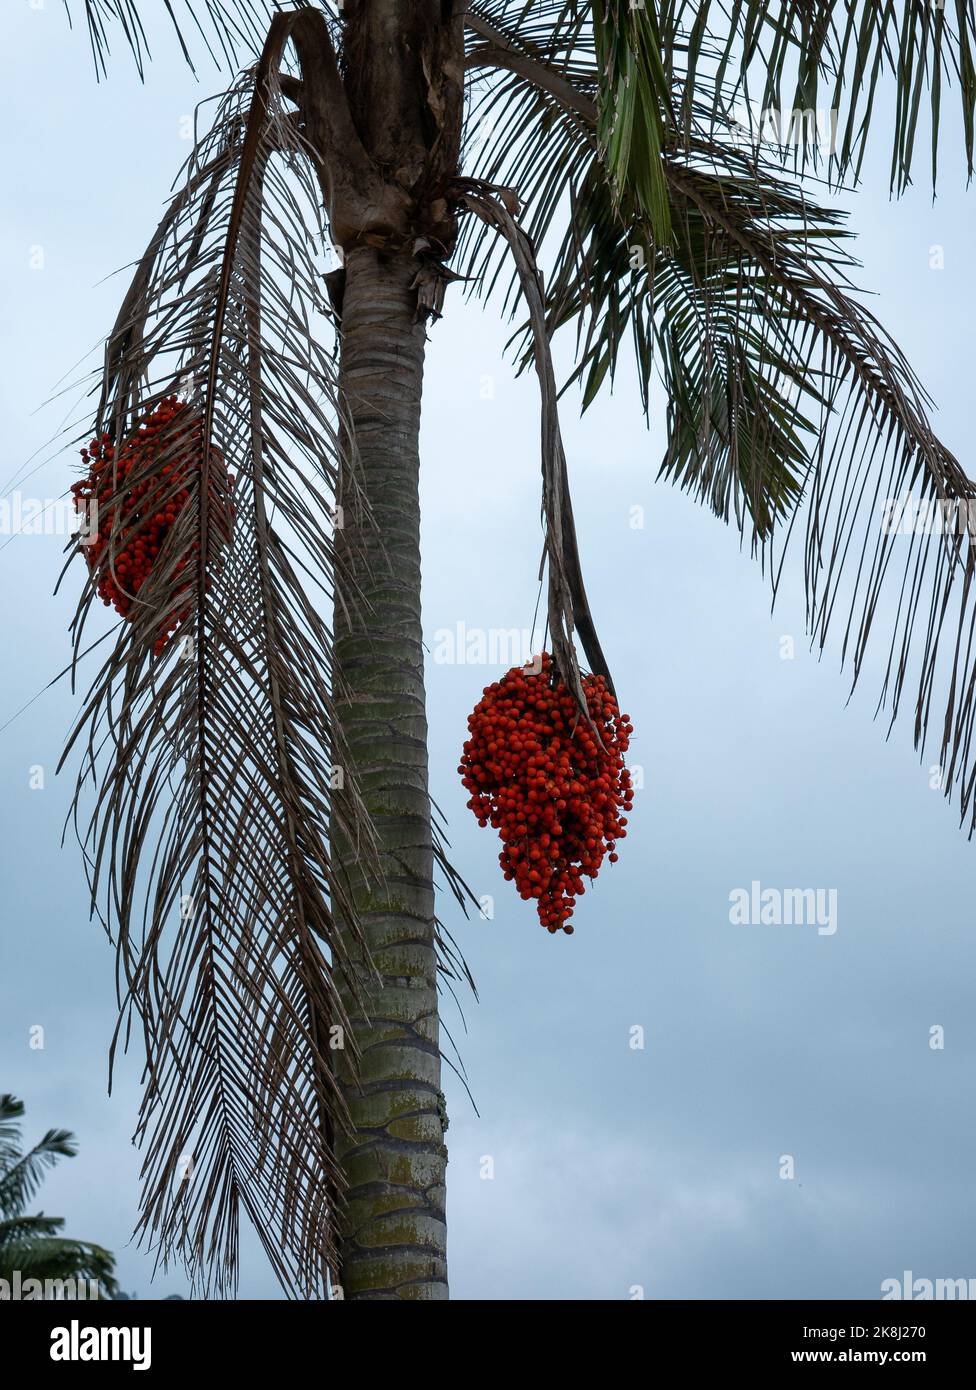 Palm Tree with Small Orange Fruits Known as Moriche Palm, Ité Palm, Ita, Buriti, Muriti, (Mauritia flexuosa) on a Cloudy Day Stock Photo